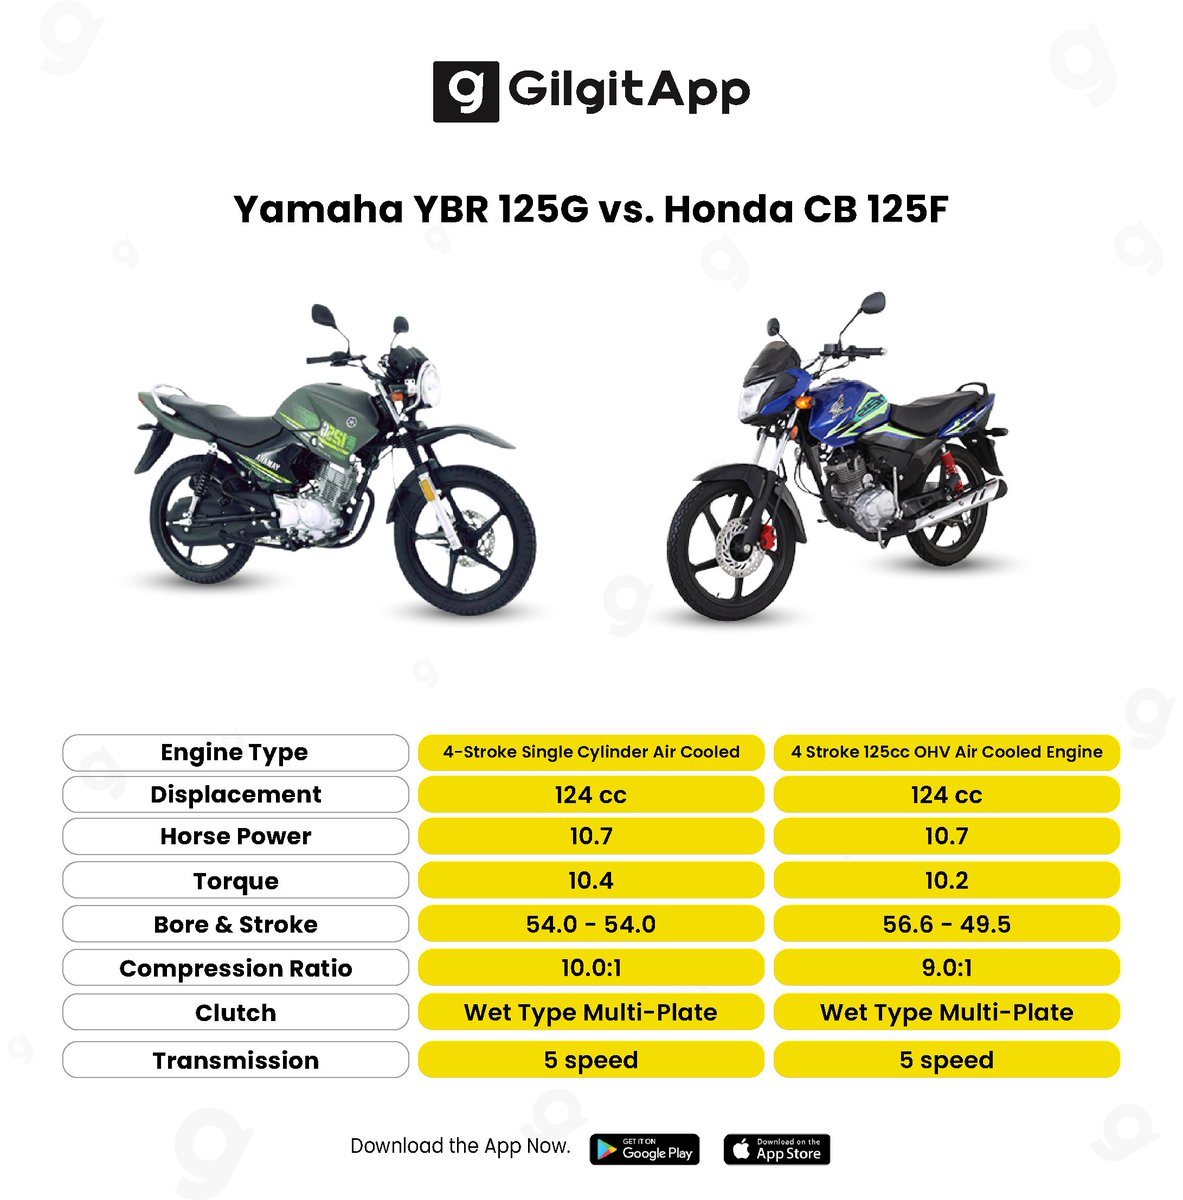 Yamaha YBR 125G vs Honda CB 125F 🏍️🏍️ 
Which bike you like to ride?

.
.
.
#gilgitapp #Buy #sell #Kuchhatkkar #yamahaYBR125g #hondaCB125f #yamahabikes #Hondabikes #bikesforsale #cb125f #ybr125g #125cc #pakistan #favoritebike #usedbikesforsale